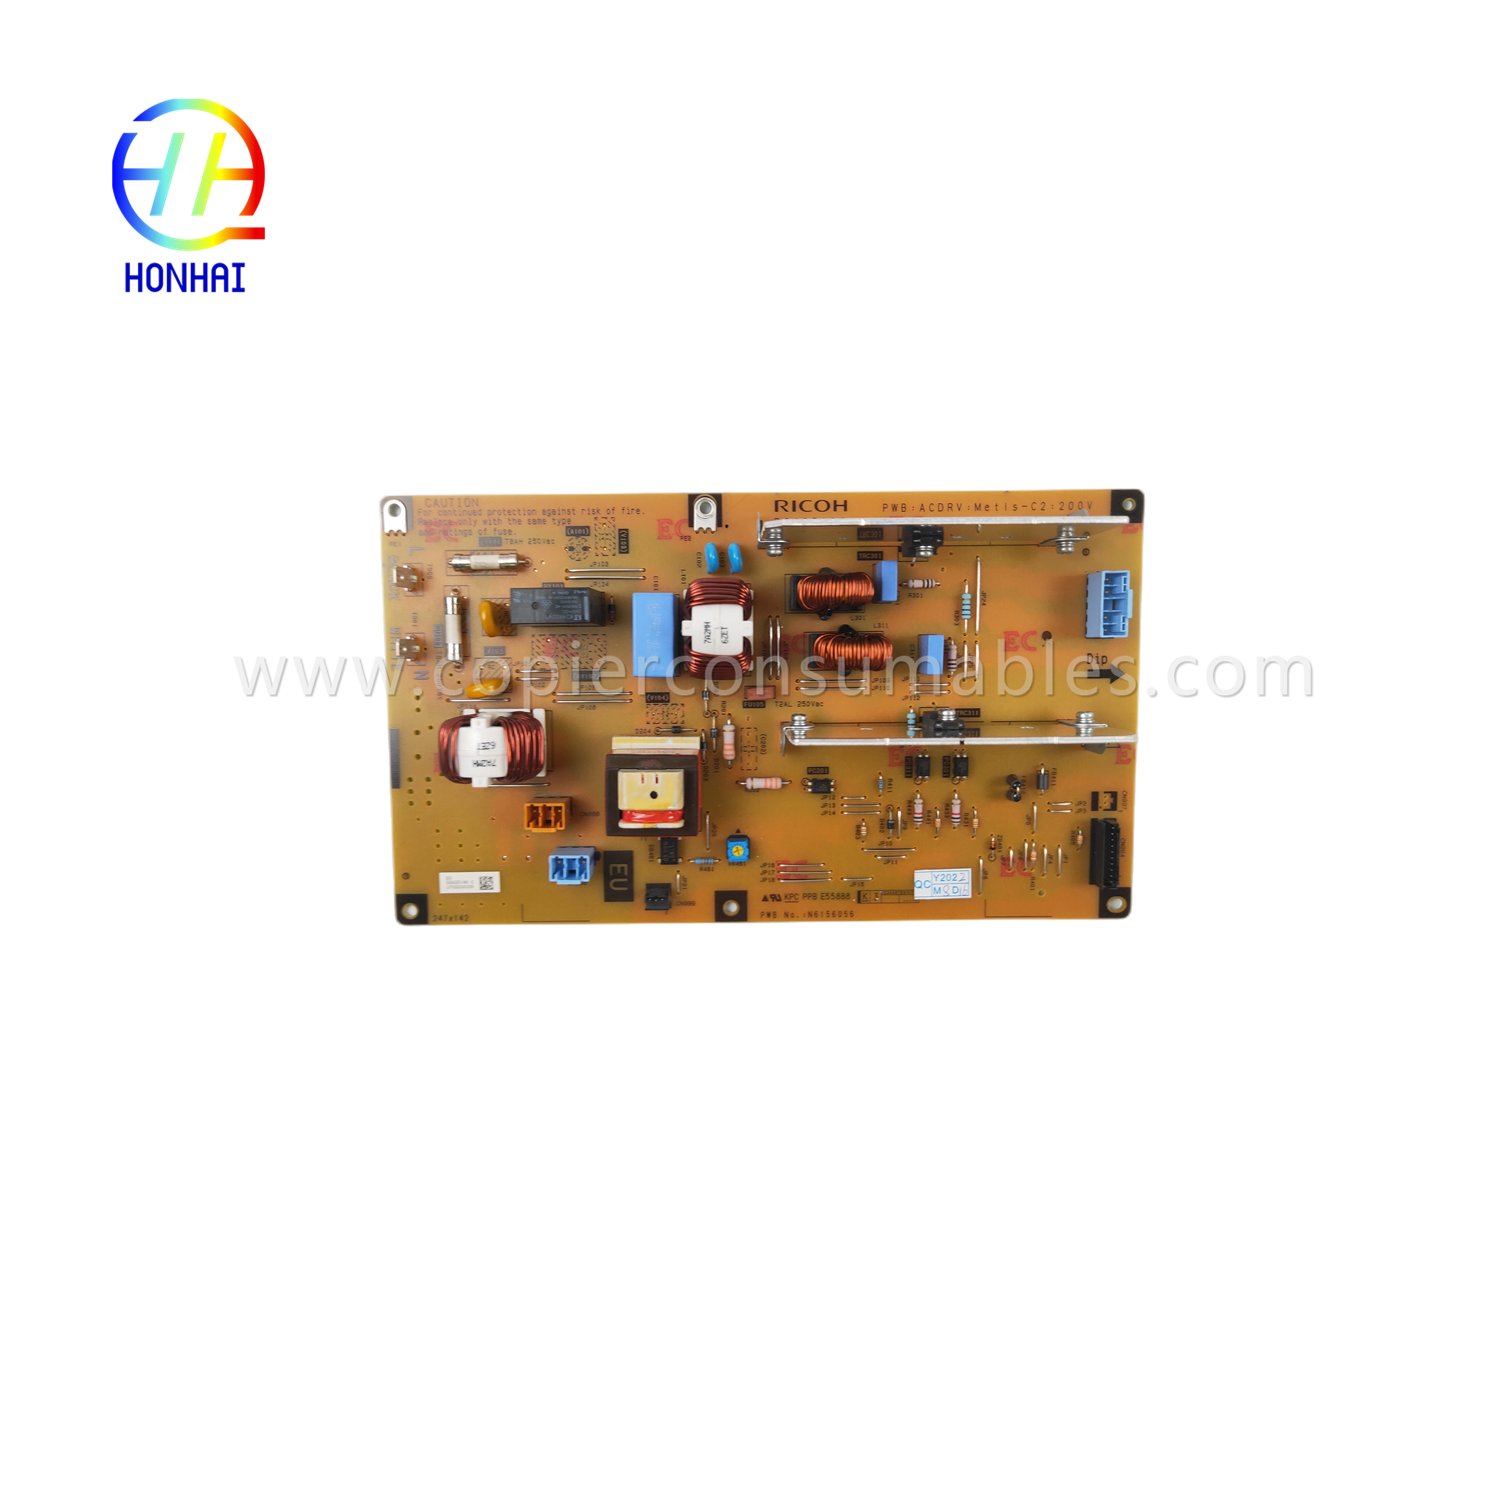 AC Controller Board für Ricoh Aficio mpc4504 mpc5504 mpc6004 D242-5186 OEM Steuerplatine